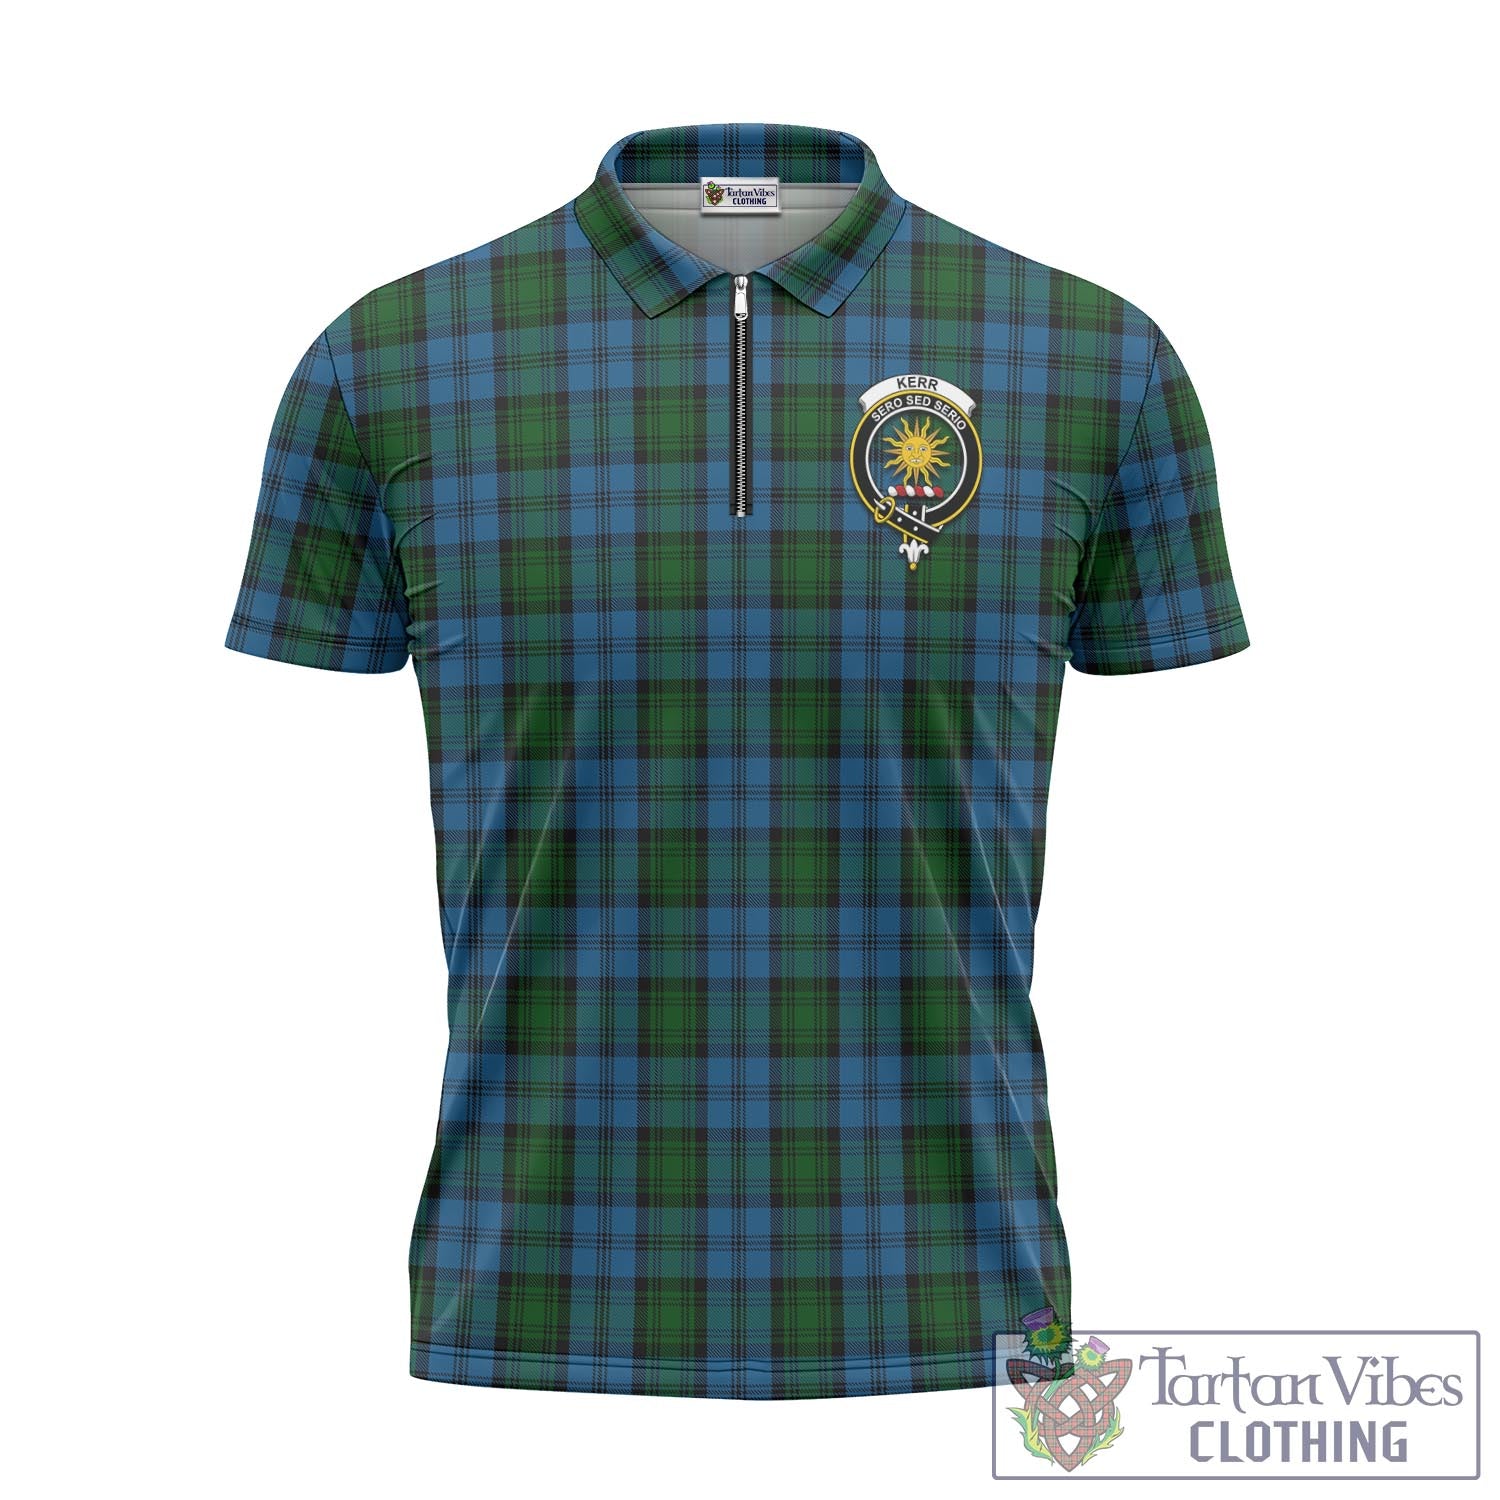 Tartan Vibes Clothing Kerr Hunting Tartan Zipper Polo Shirt with Family Crest